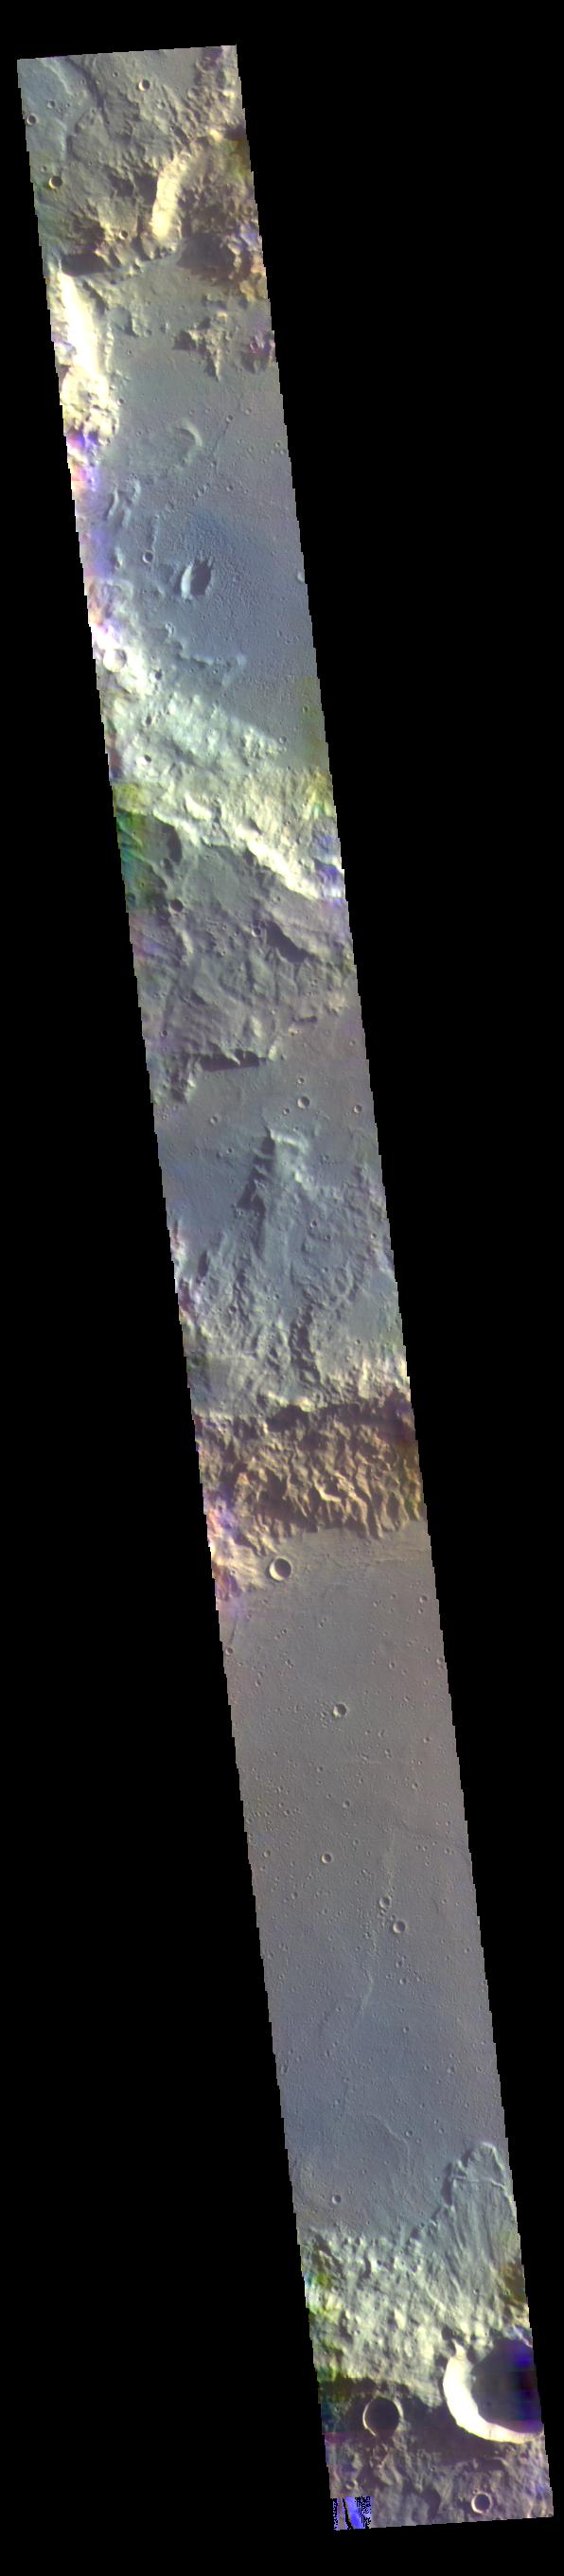 PIA23216: Terra Cimmeria - False Color